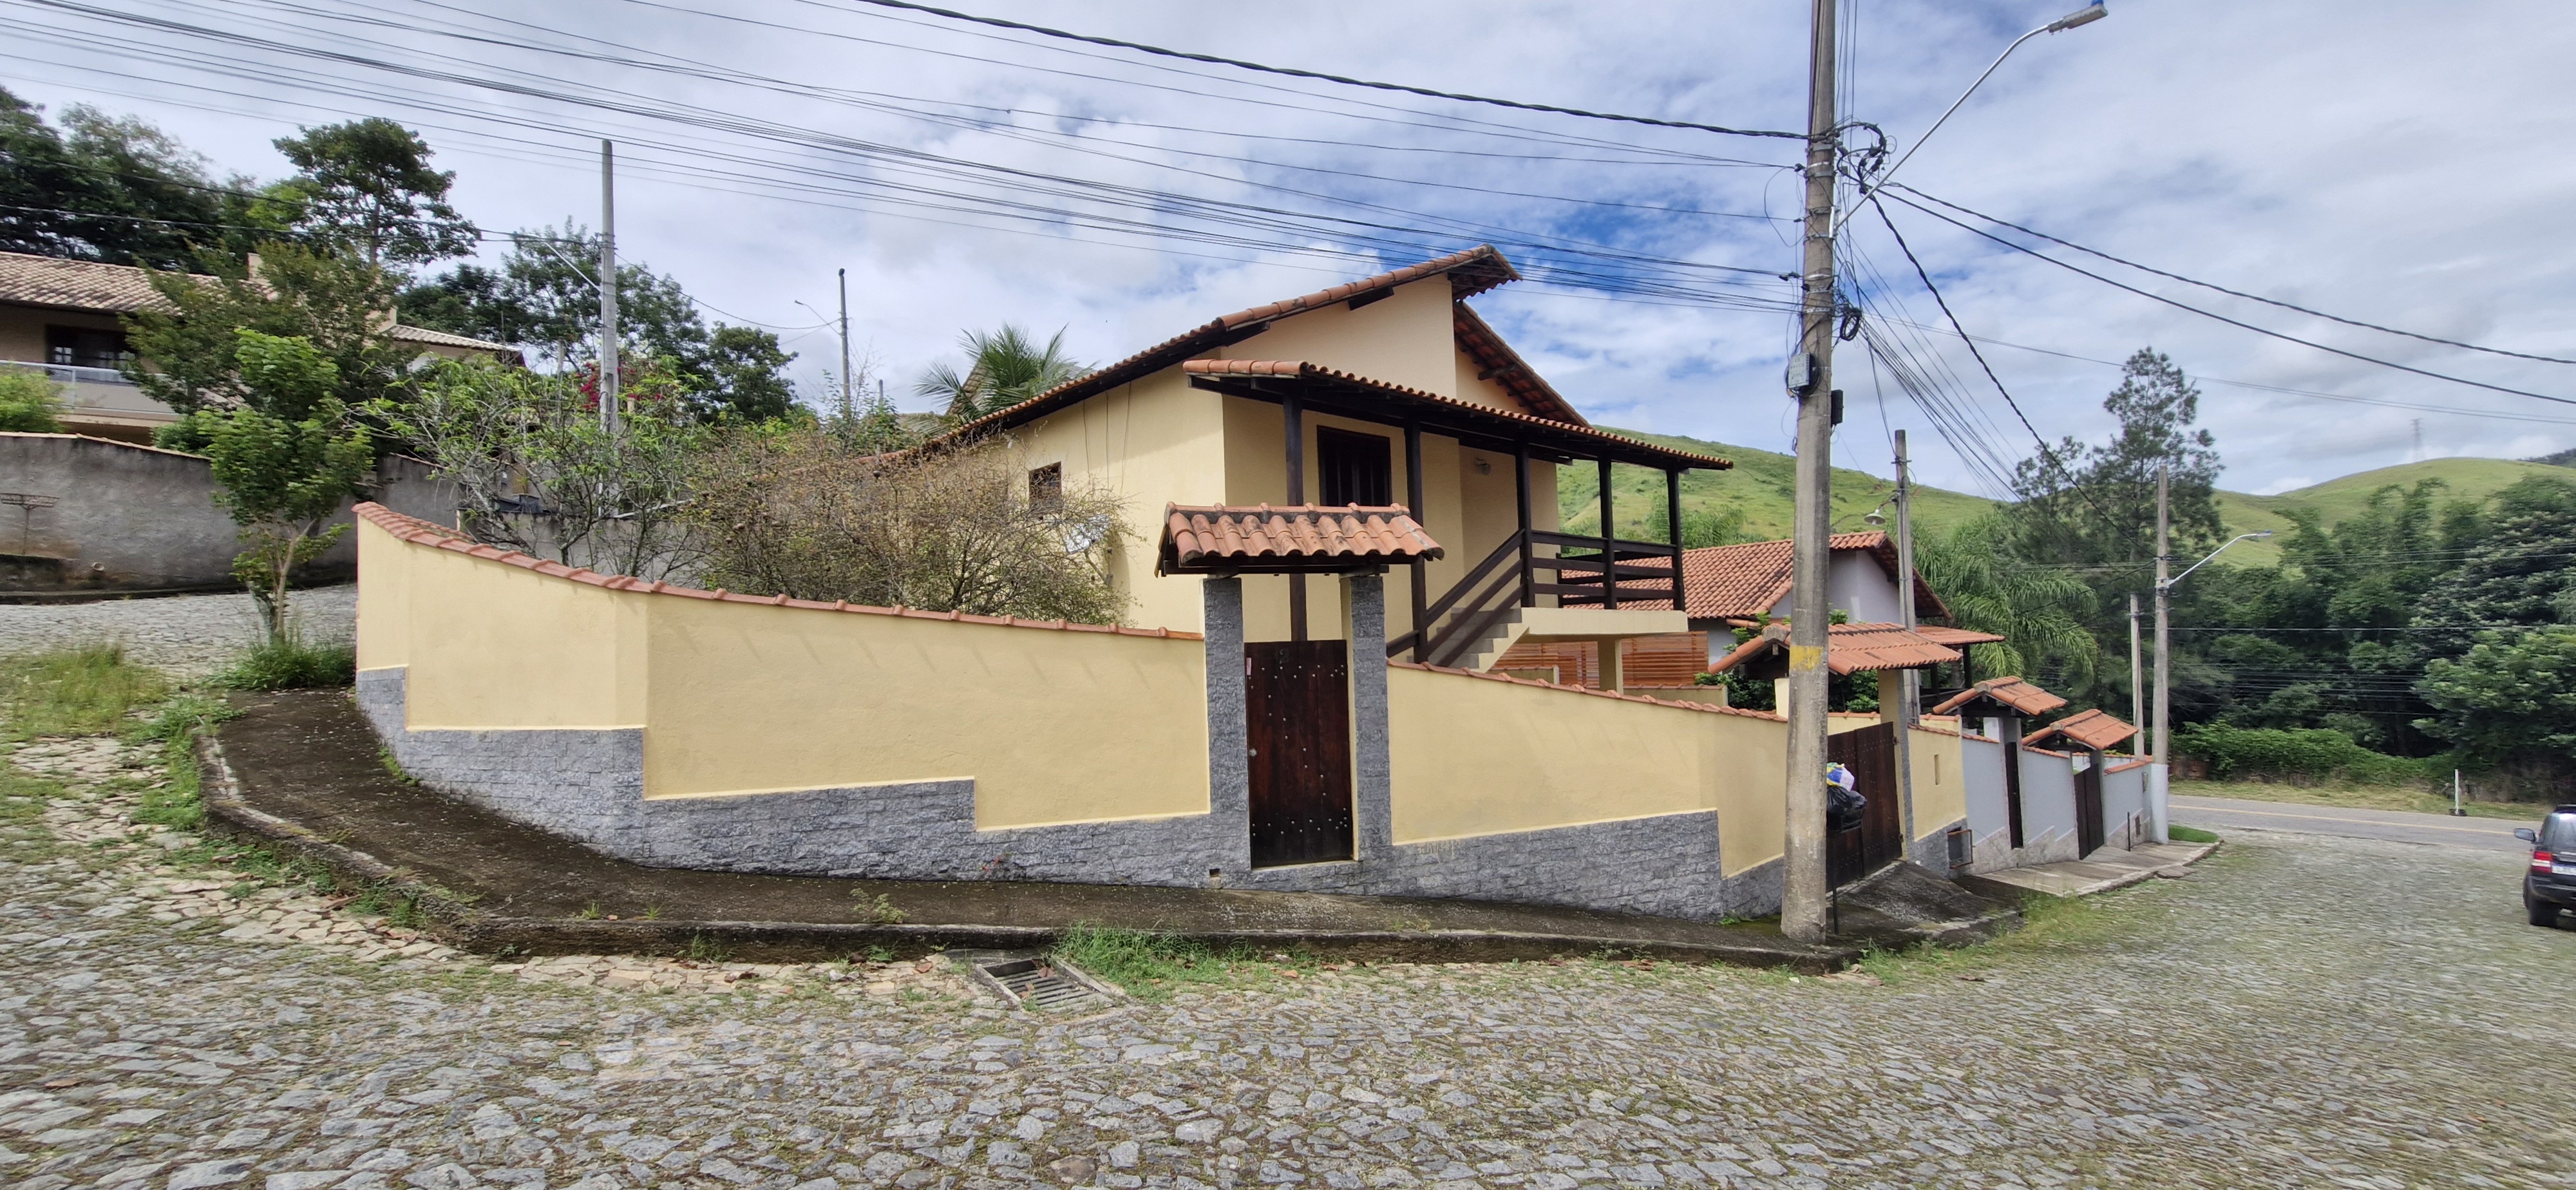 Casa - Venda, MATADOURO, Vassouras, RJ